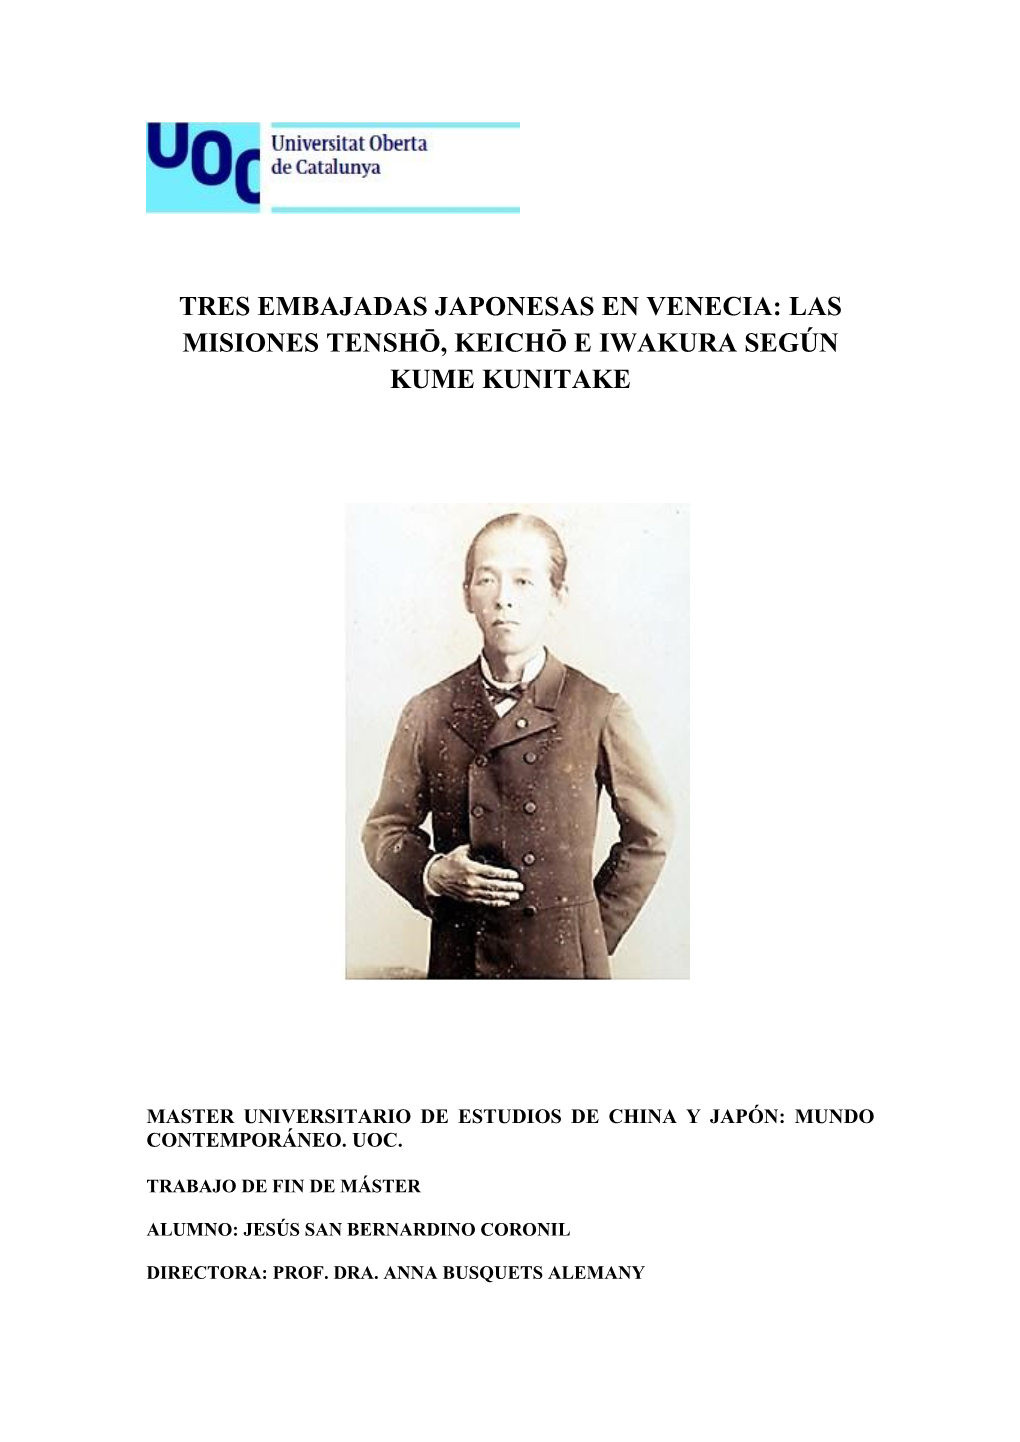 Las Misiones Tensho, Keicho E Iwakura Según Kume Kunitake